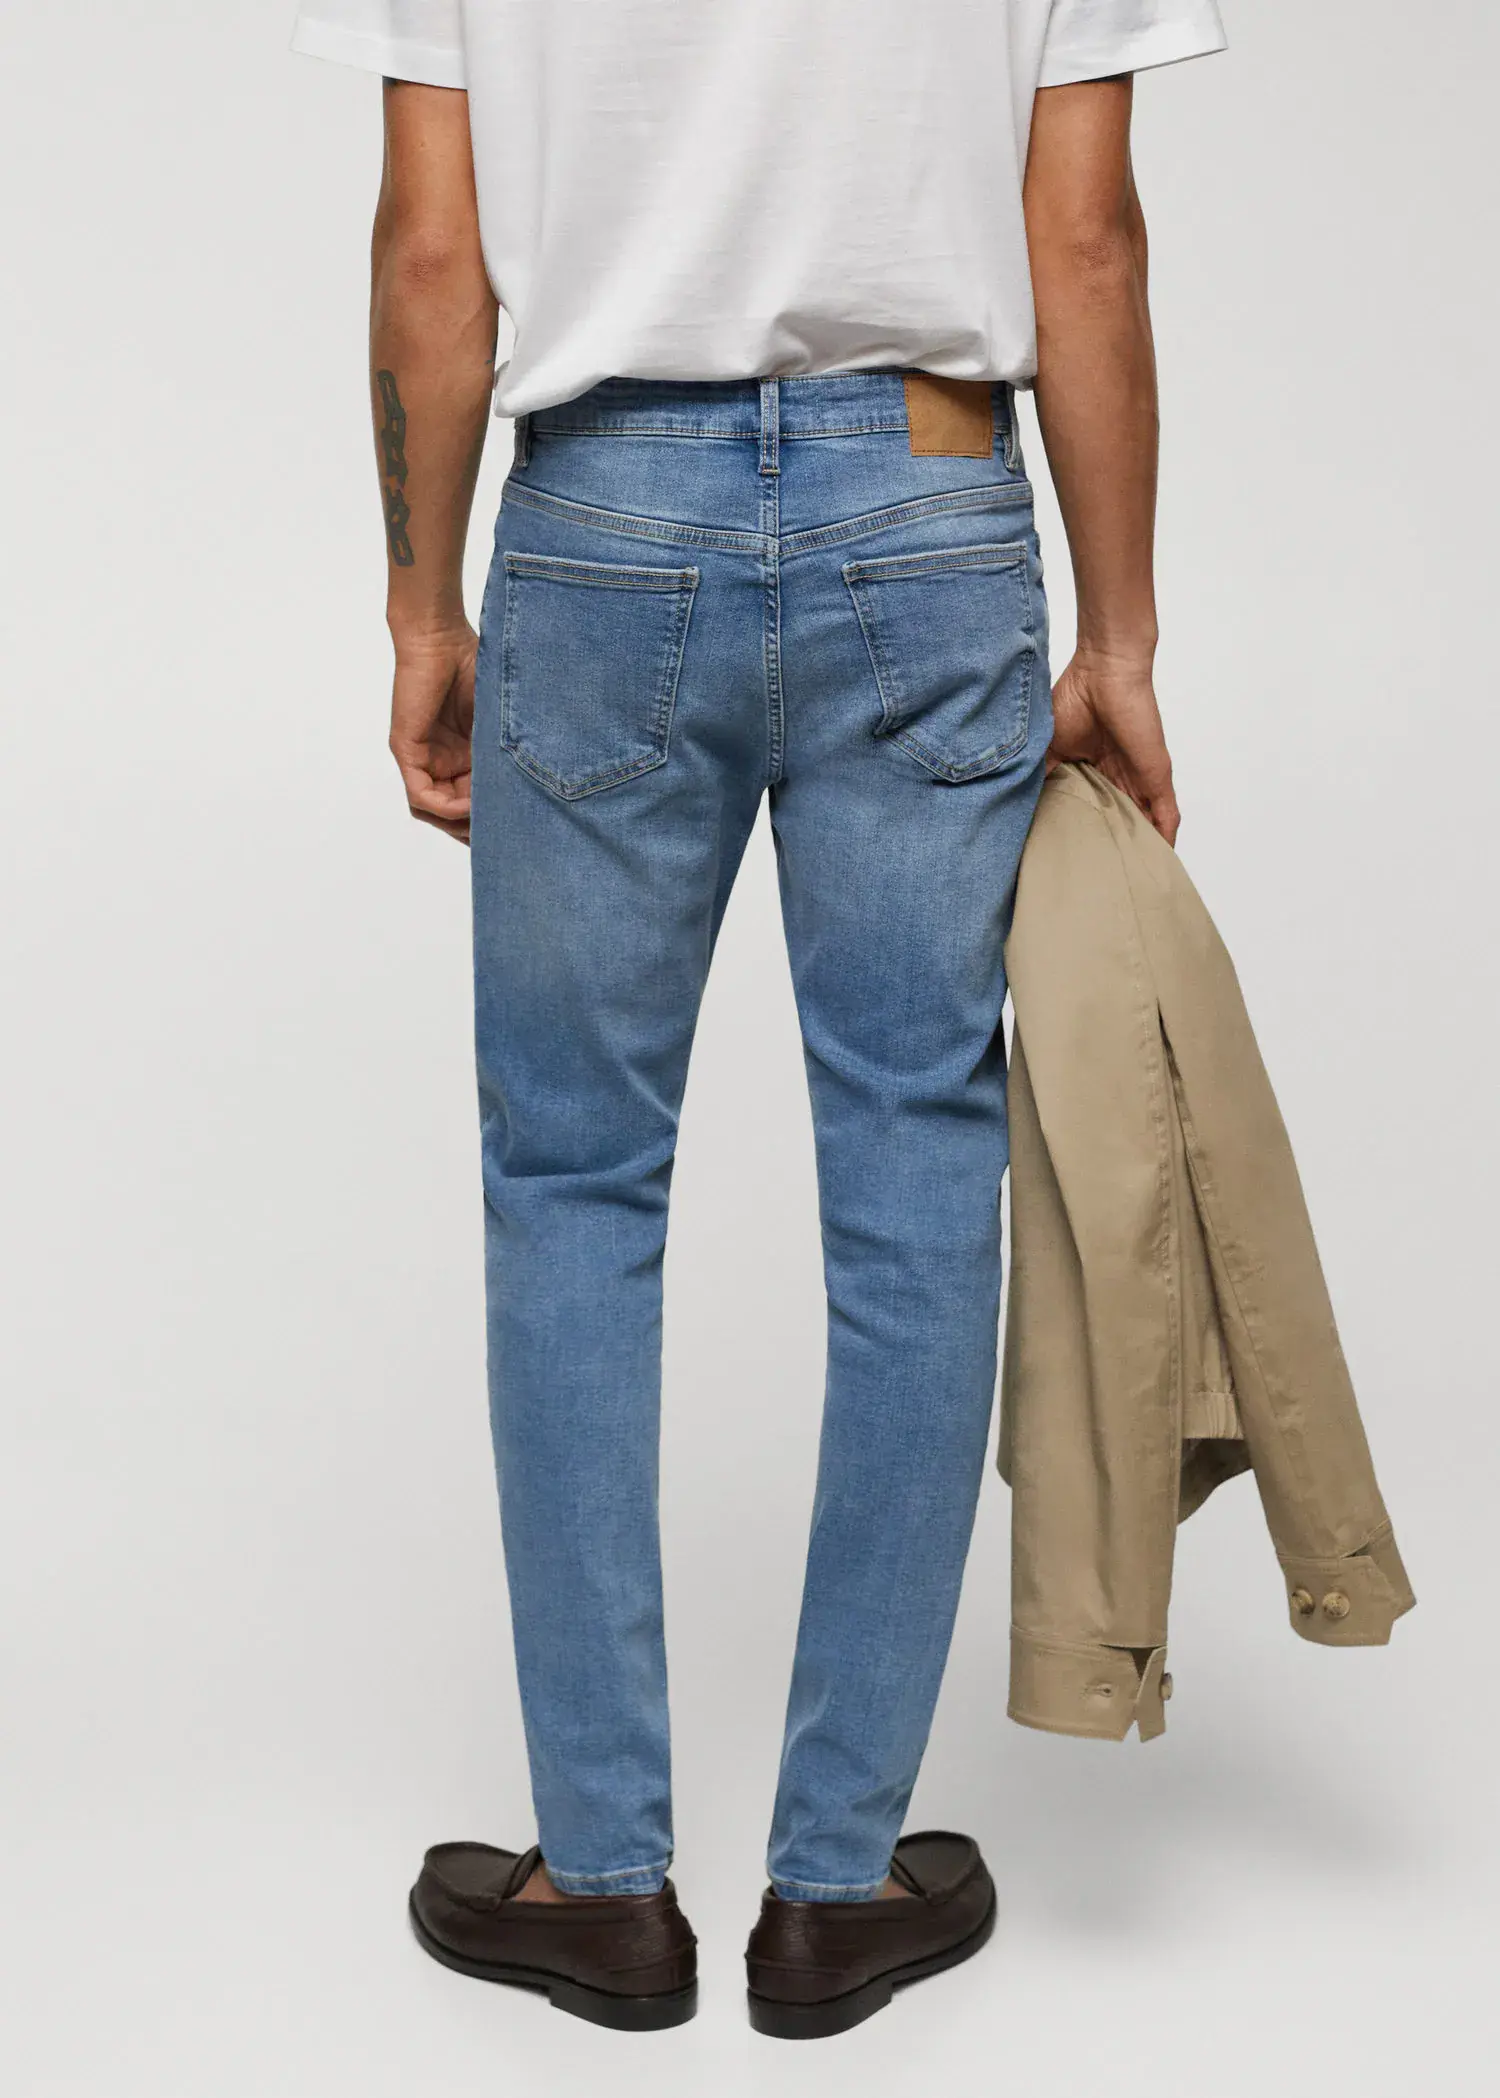 Mango Jude skinny-fit jeans. 3